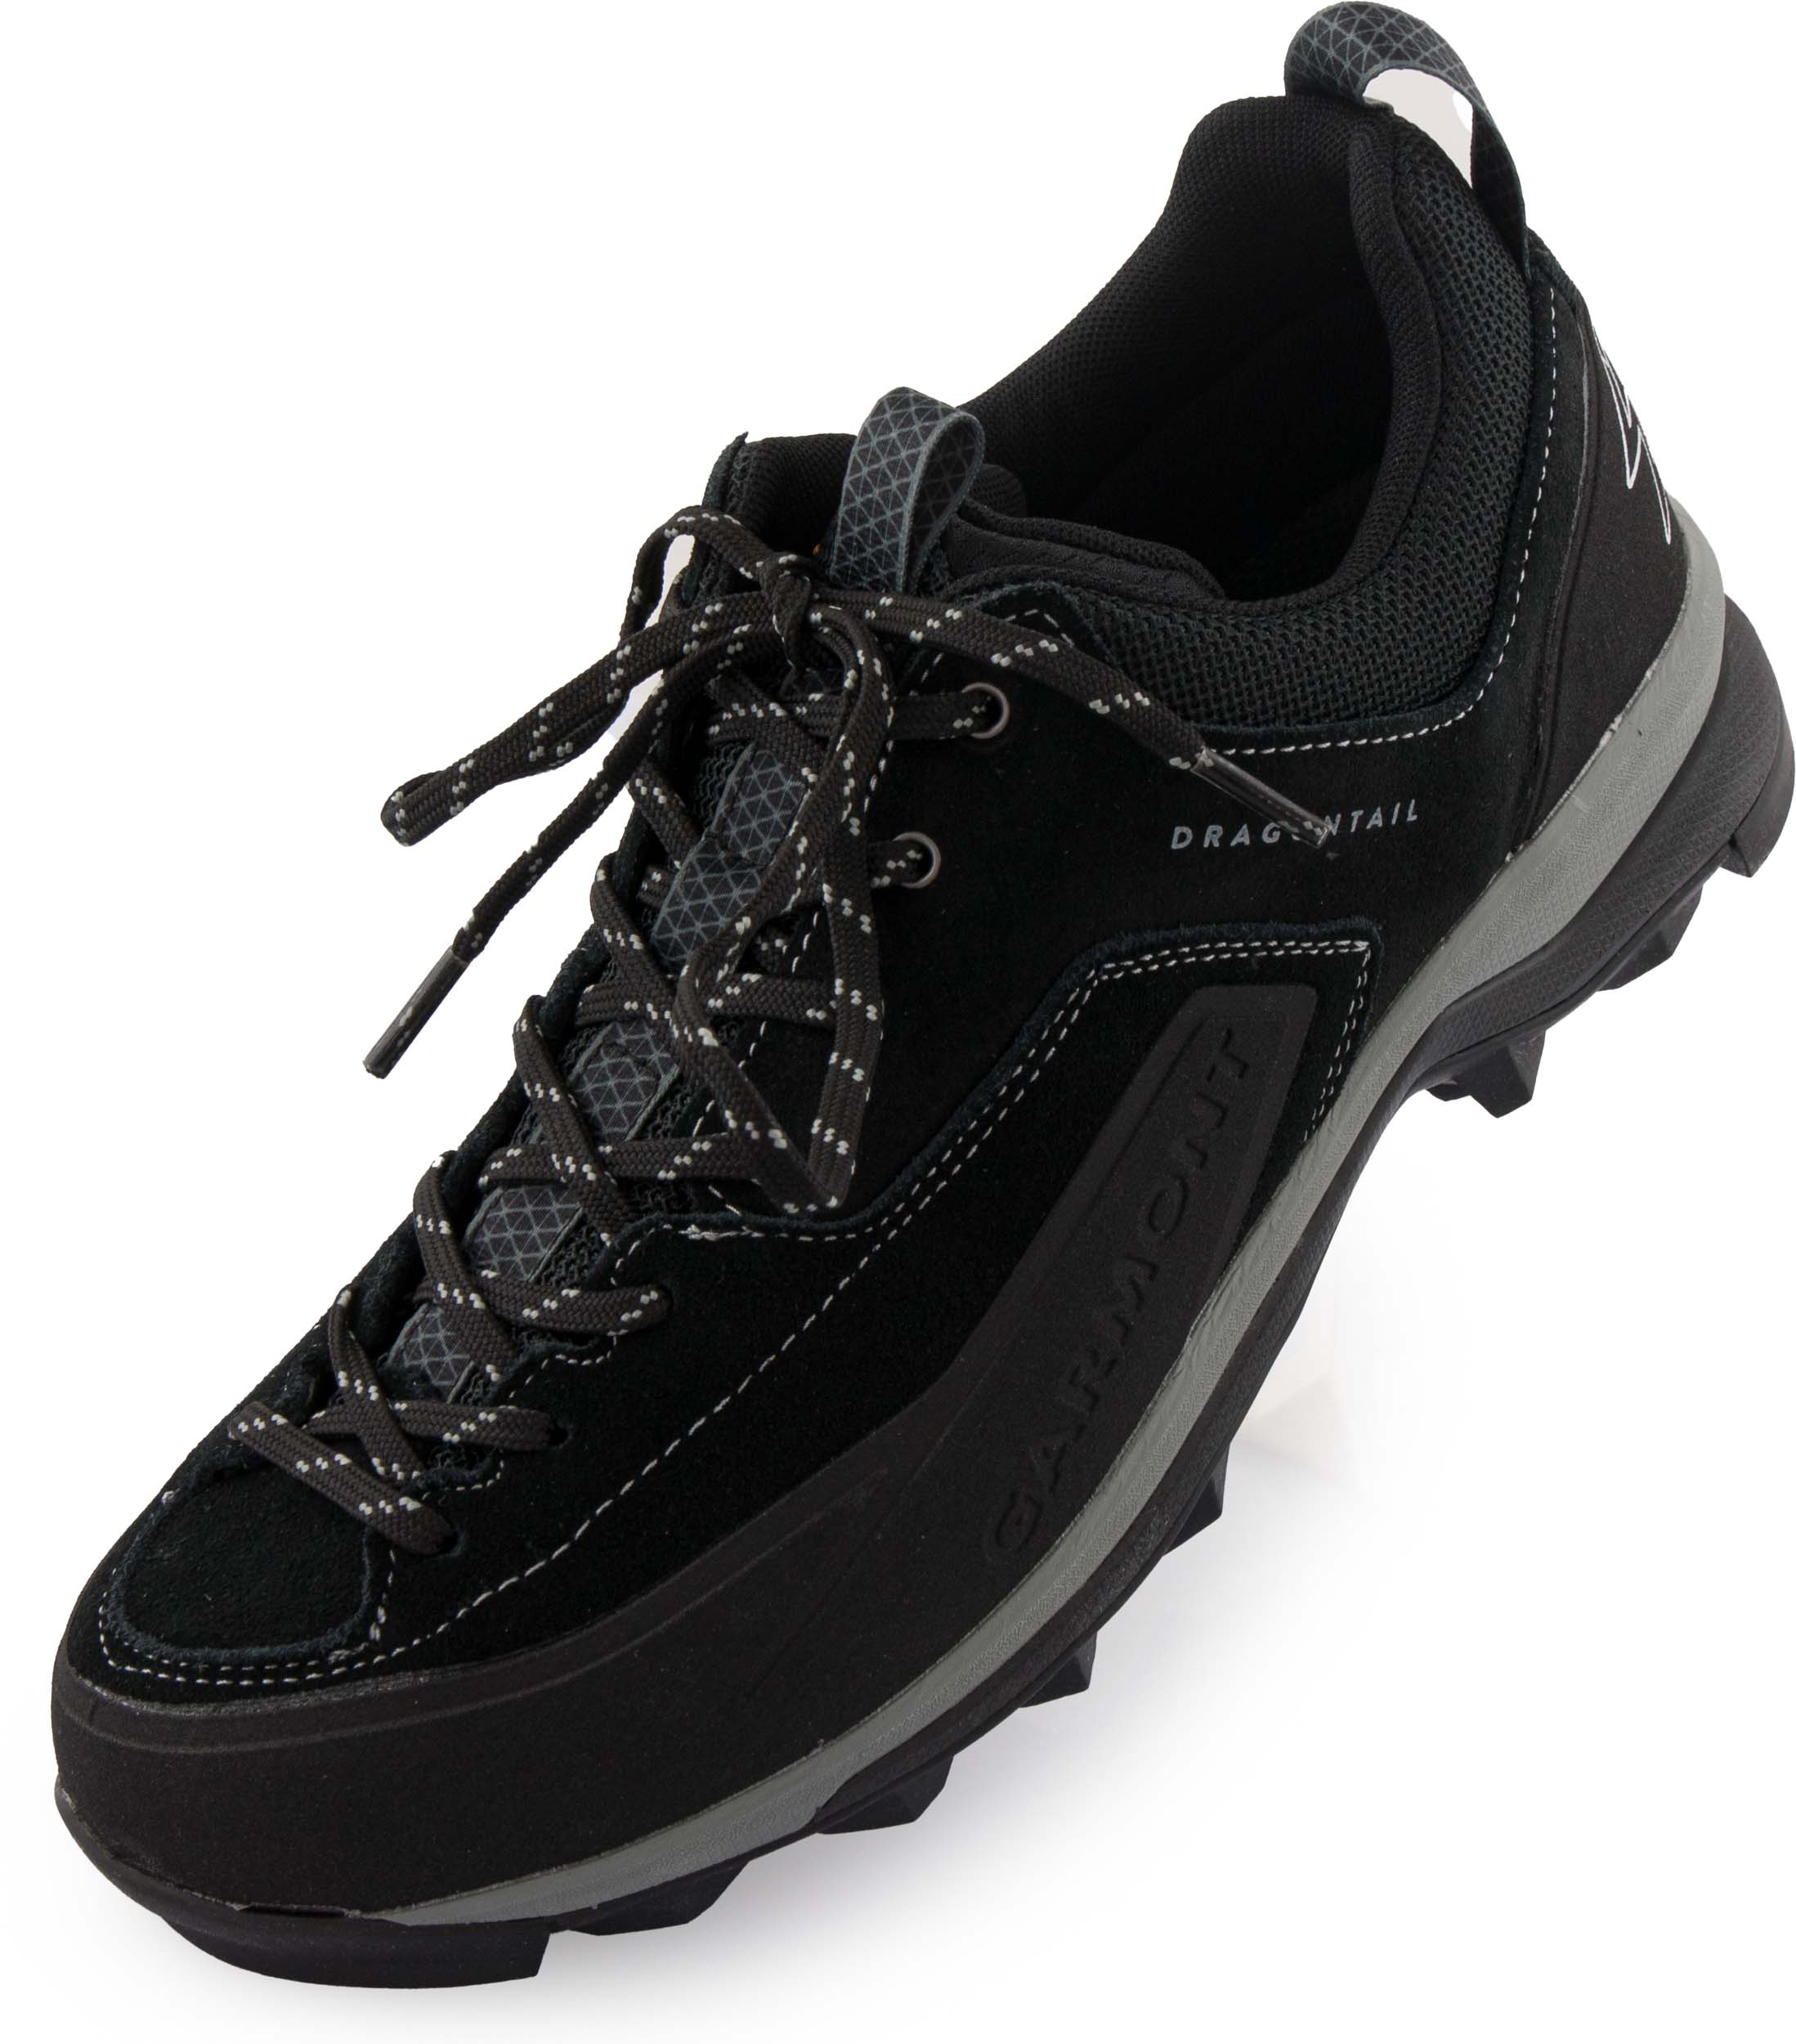 Outdoorová obuv Garmont Men Dragontail Black|45